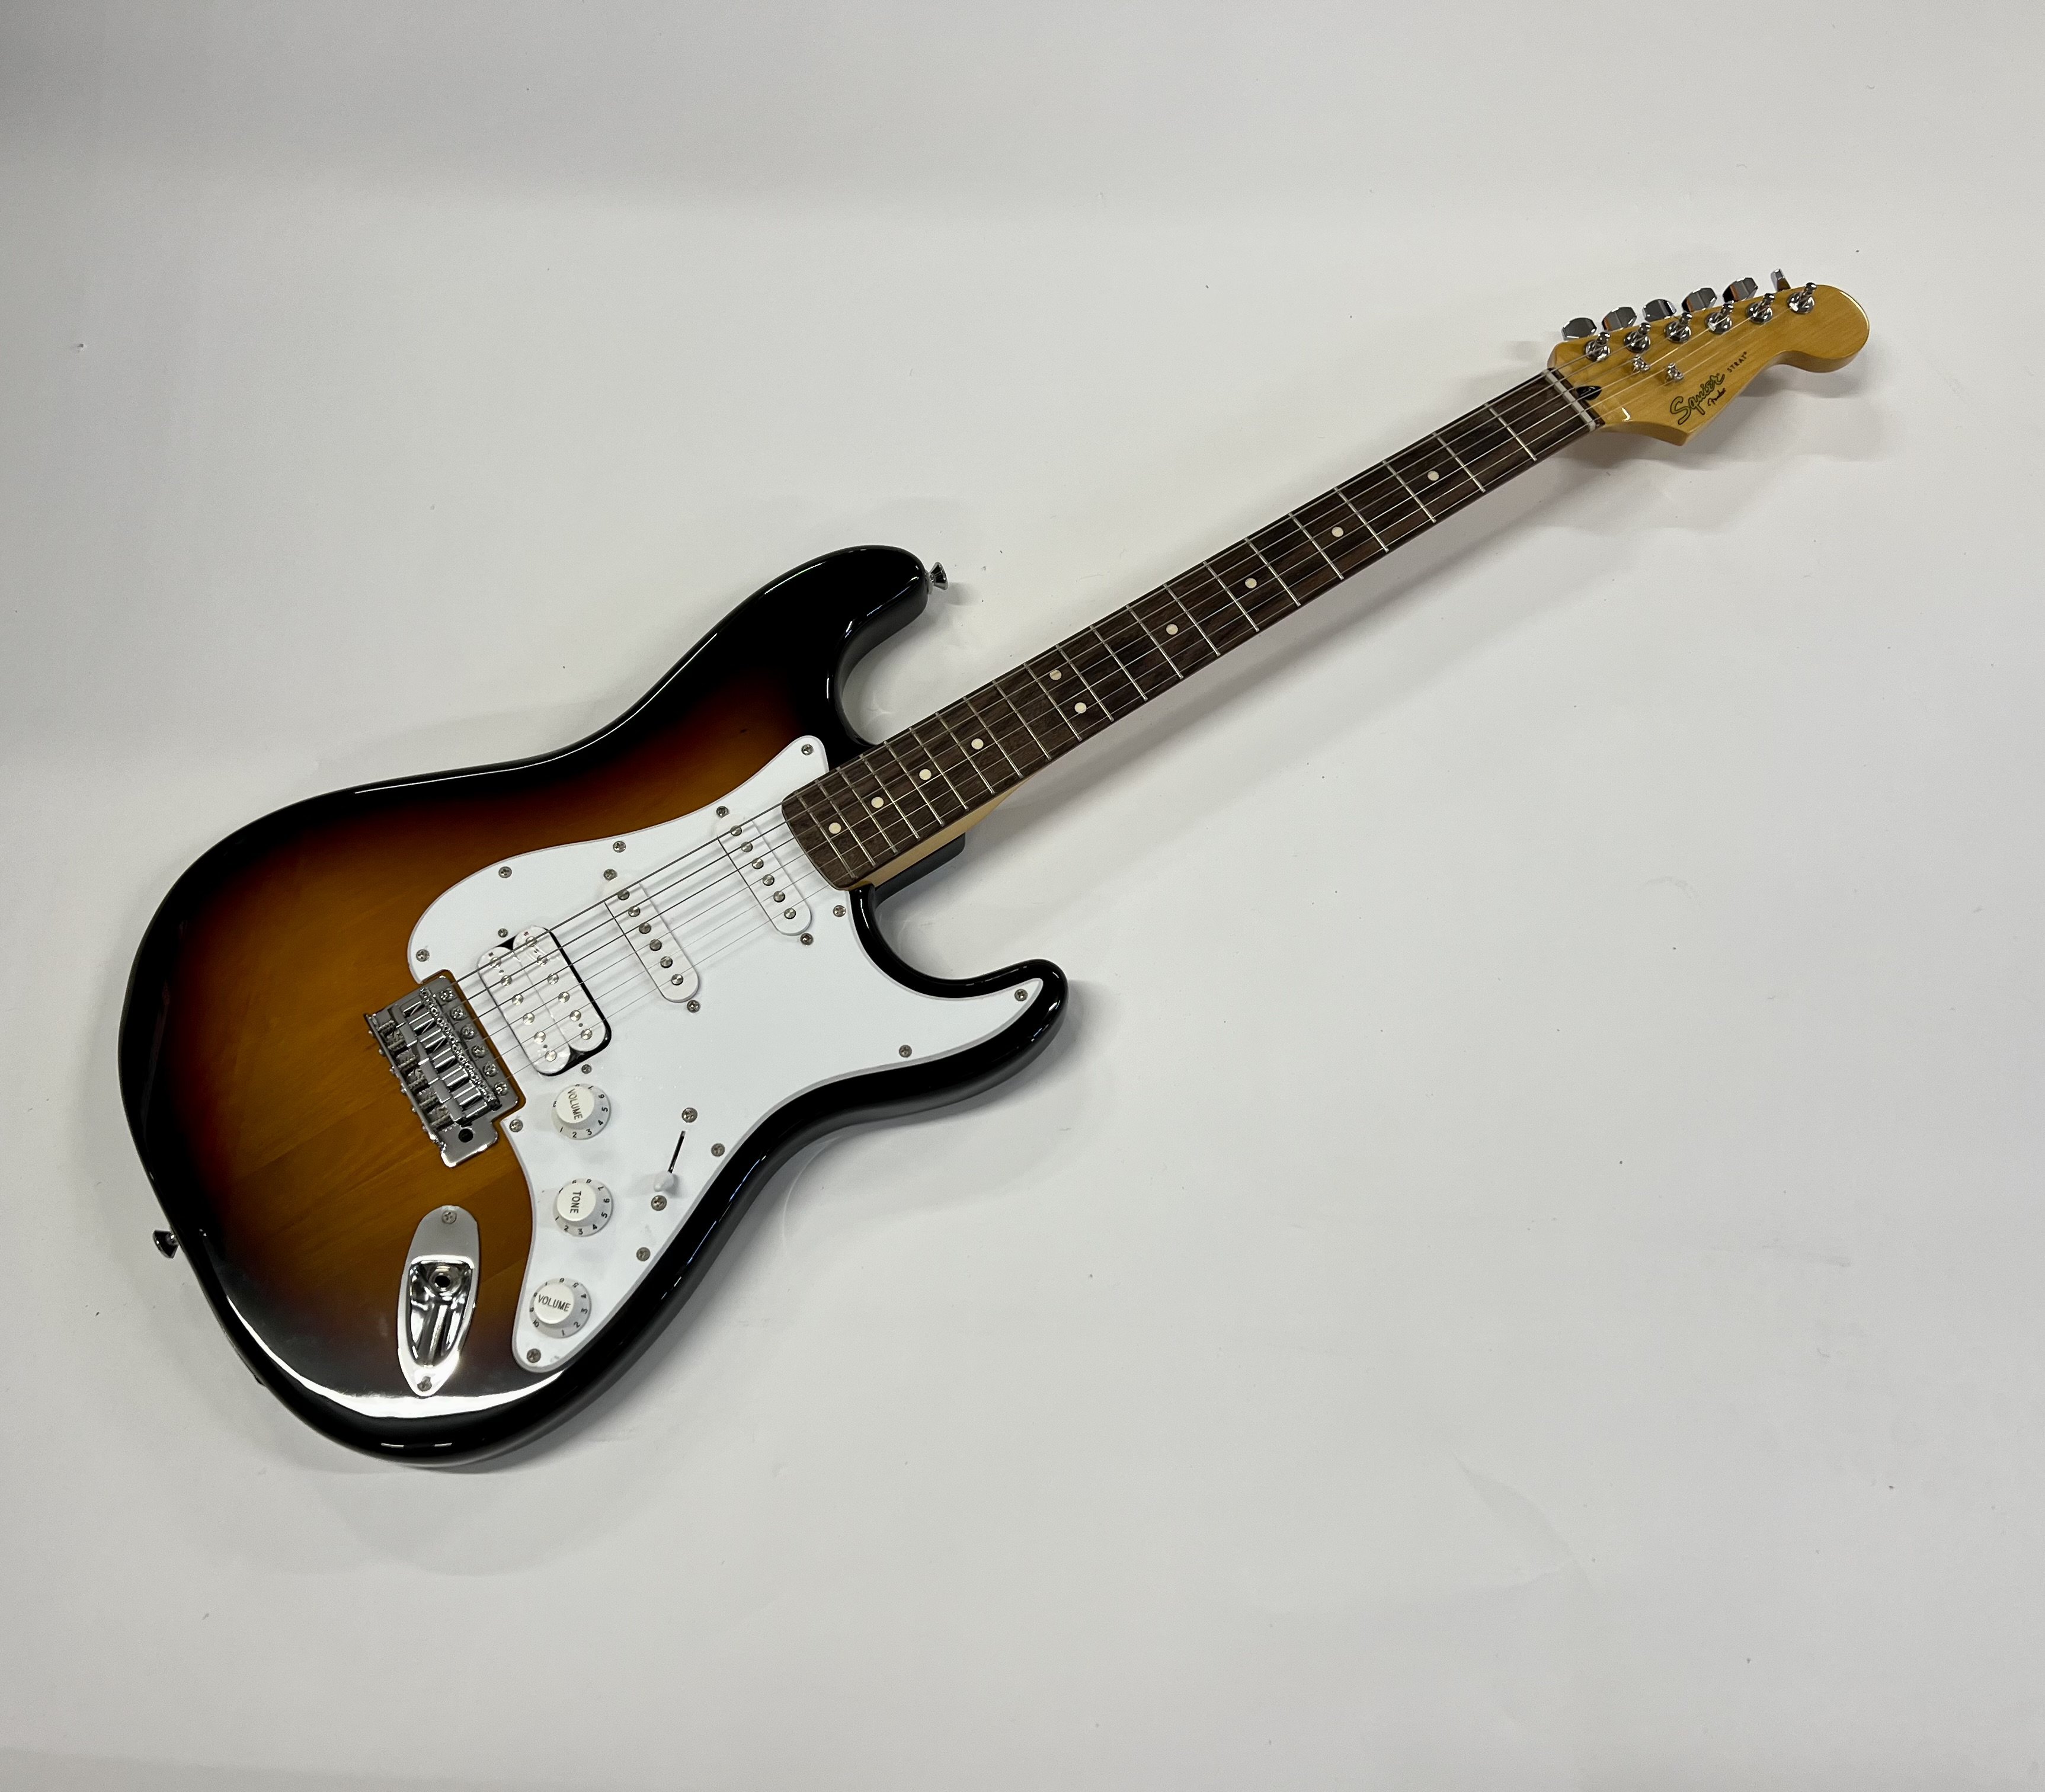 A Squier Stratocaster guitar in Fender Tweed Case